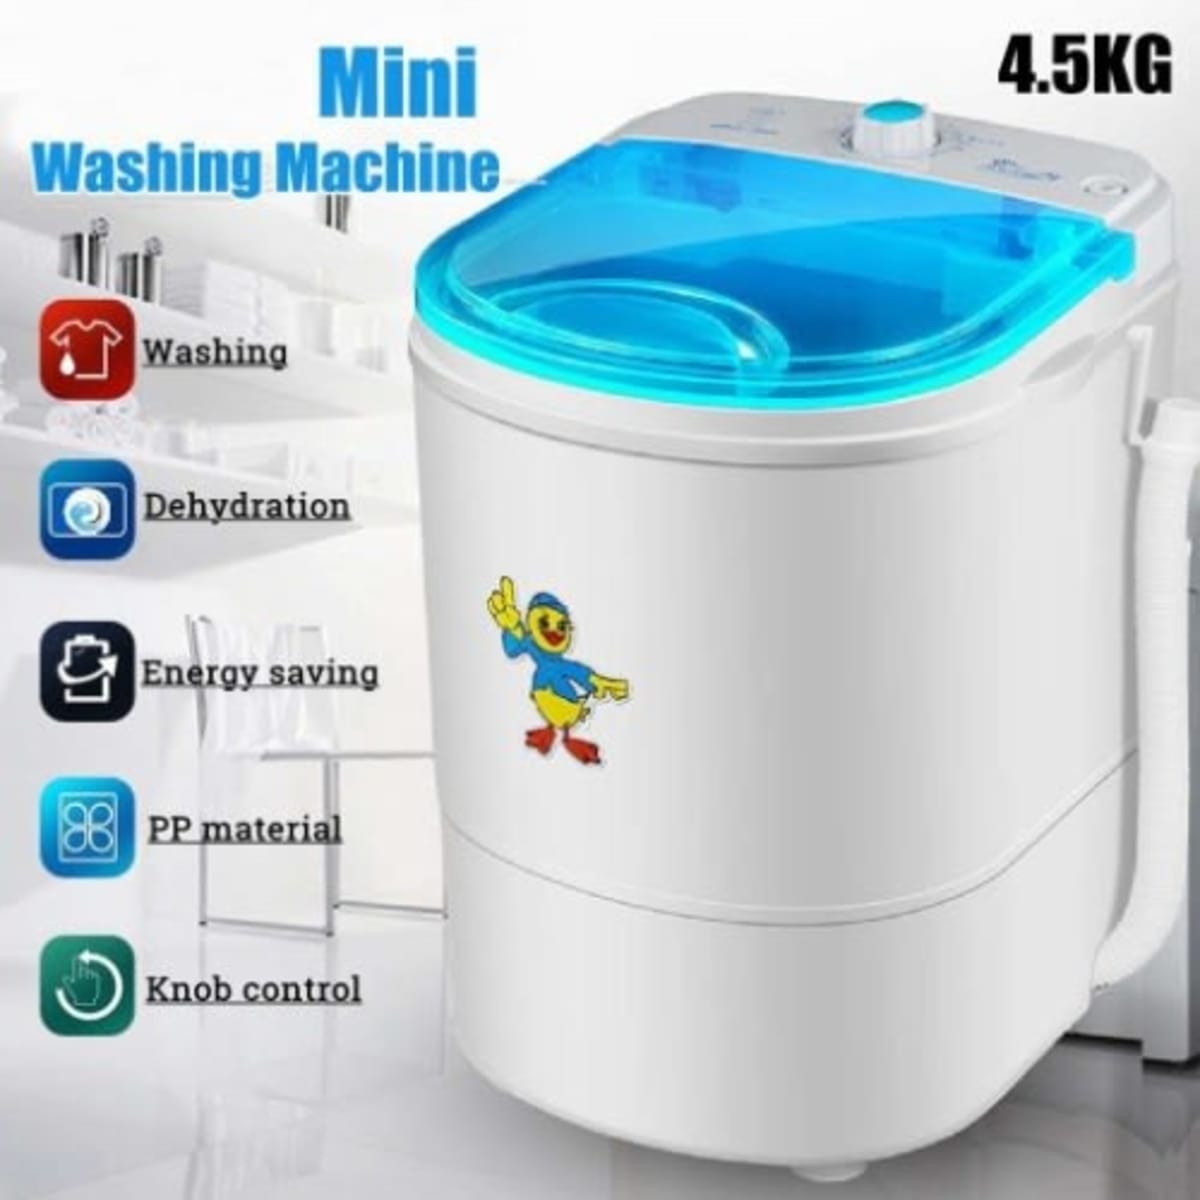 Mini Washing Machine - 4.5kg